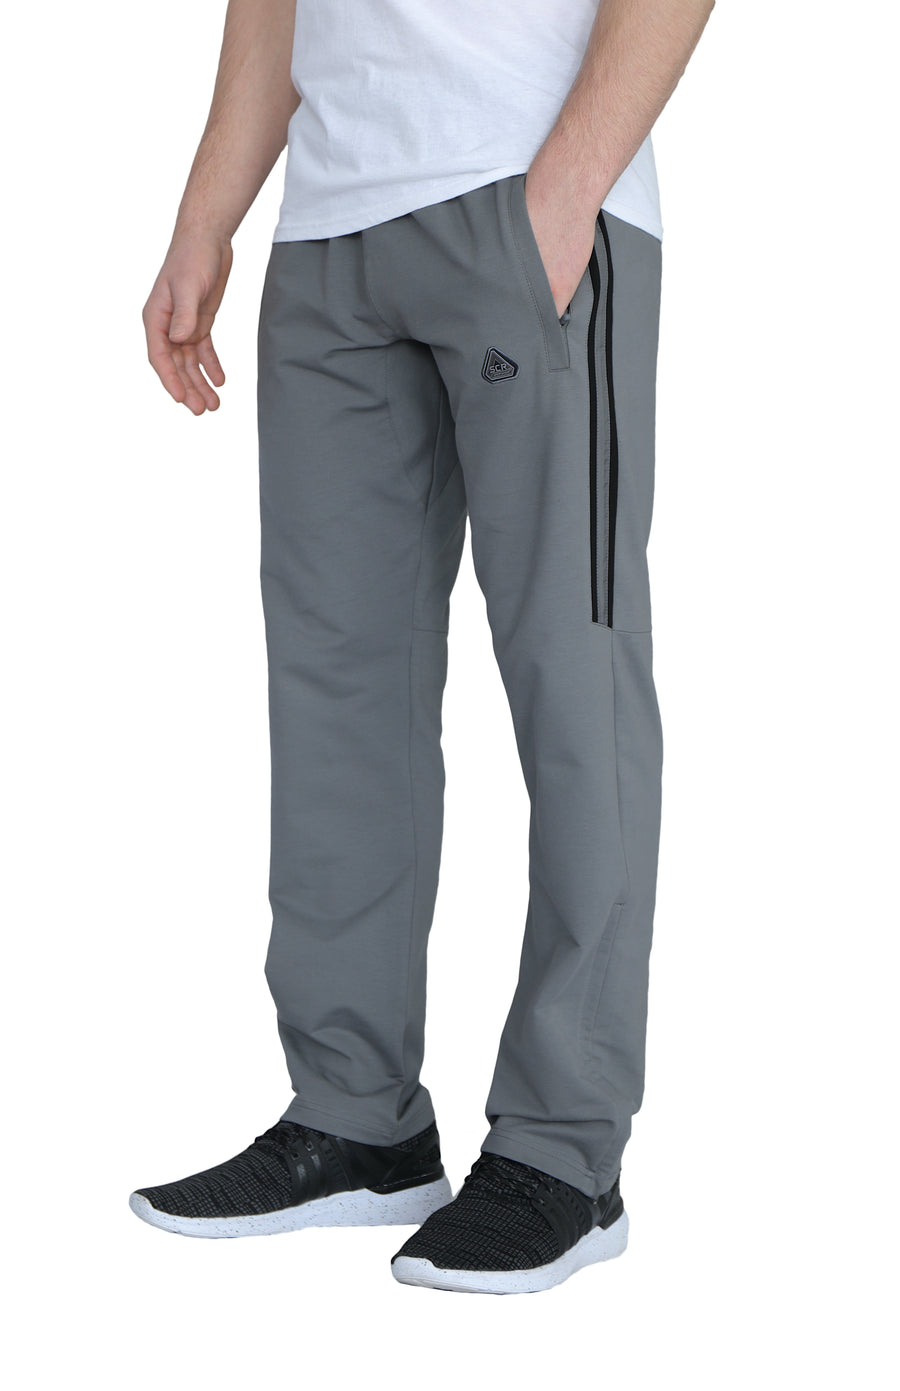 SCR SPORTSWEAR S-4X 30/32/34/36/38 Long Inseam Men's Sweatpants Workout  Athletic Running Sweats Lounge Pants Zipper Pockets, Straight/Heather Grey